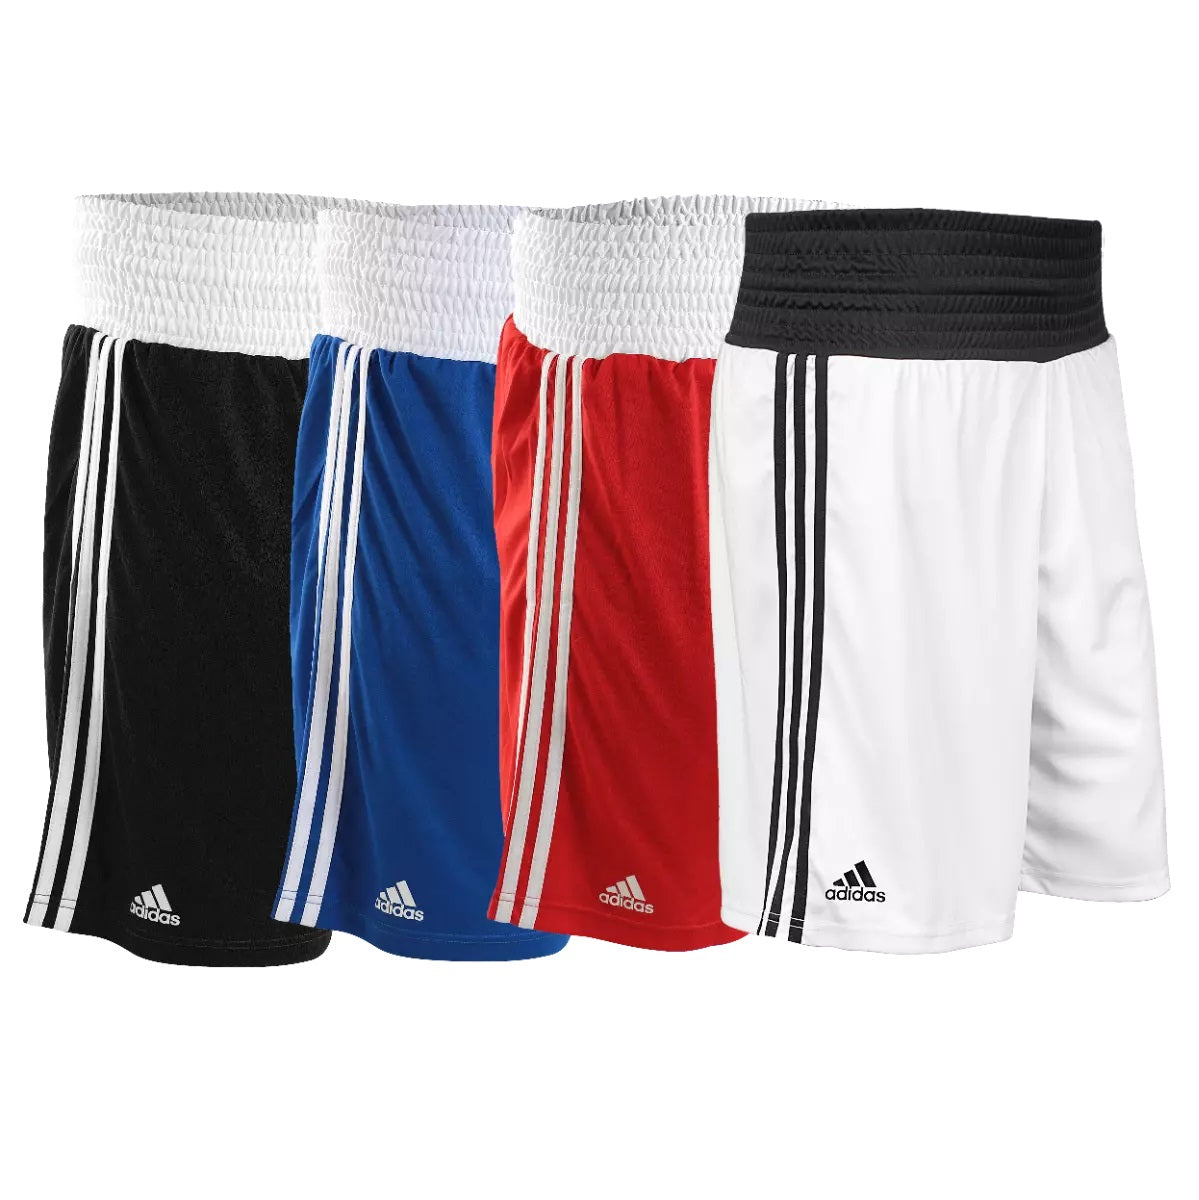 adidas Base Boxing Shorts Mens Black White Red Blue